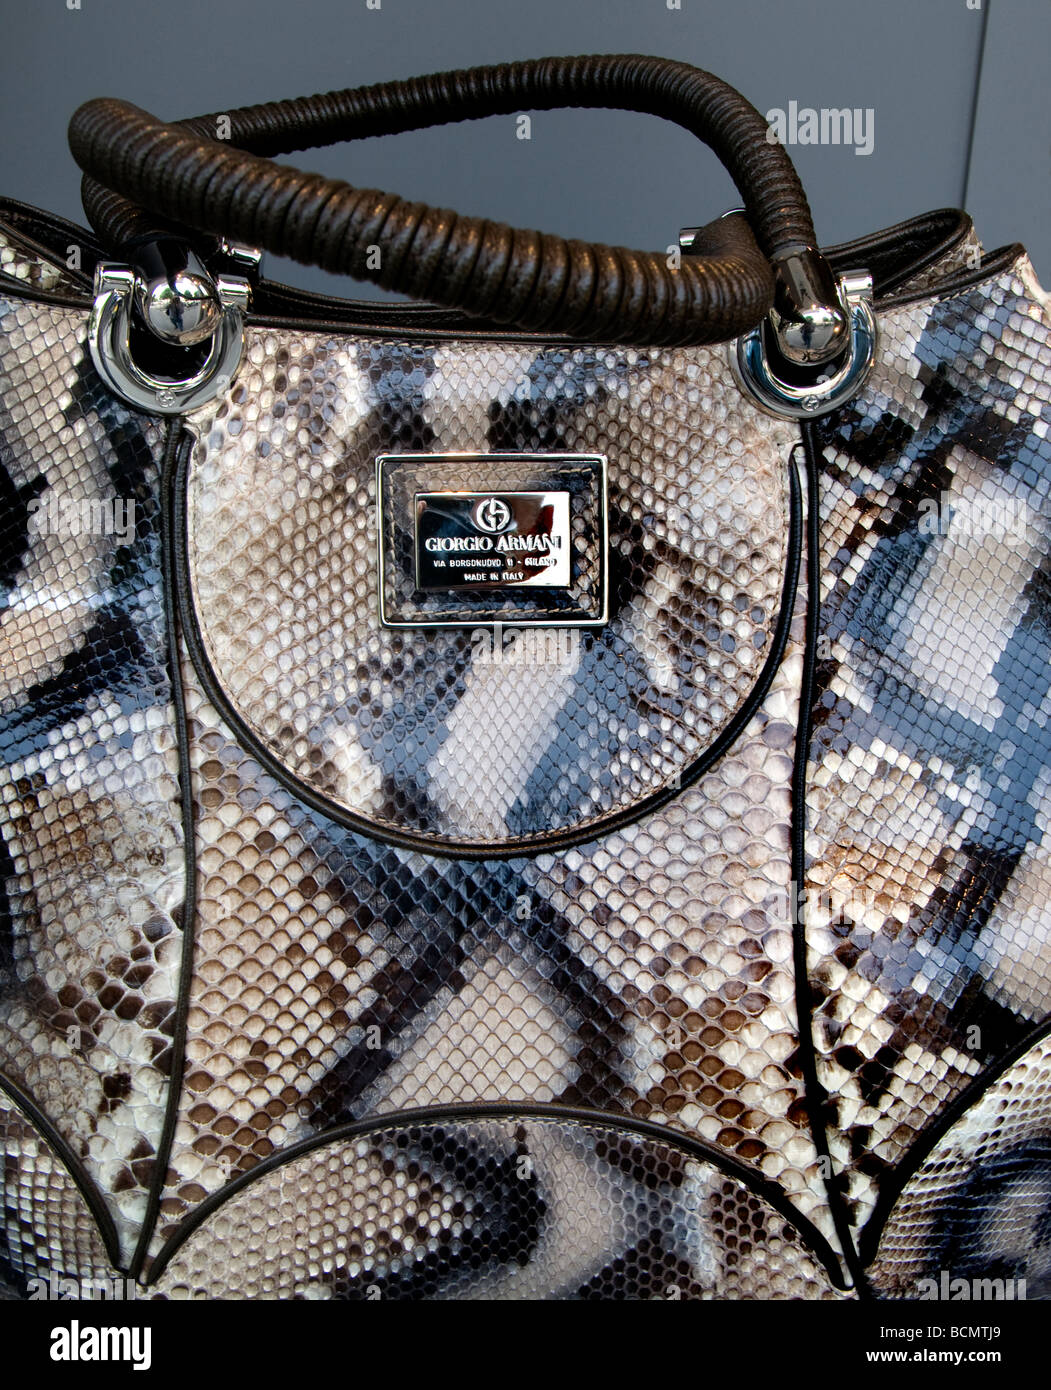 Fashion Paris France French handbag Armani Stock Photo